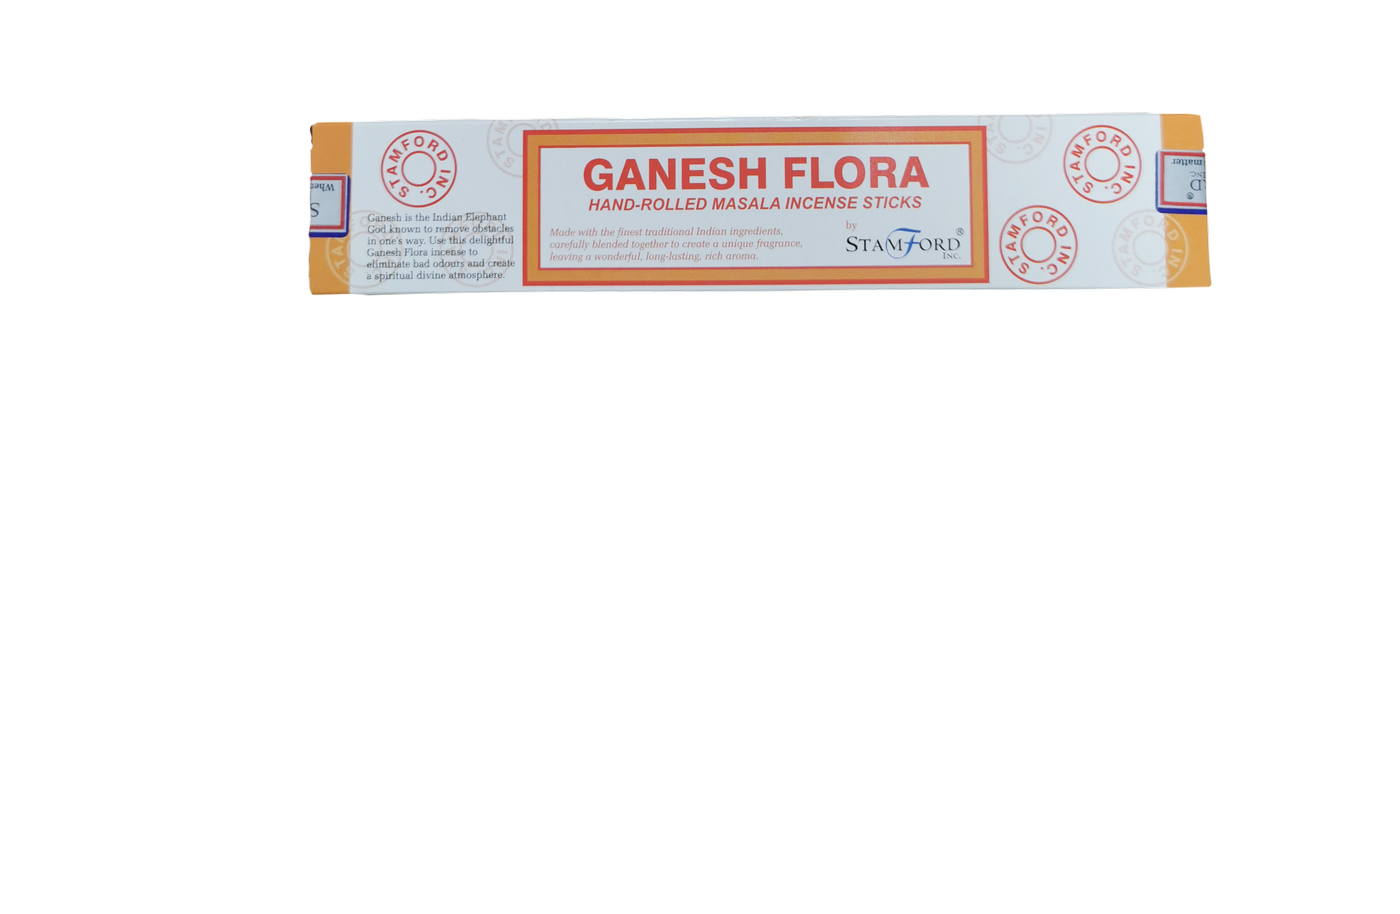 Stamford Ganesh Flora Hand-Rolled Masala Incense Sticks.